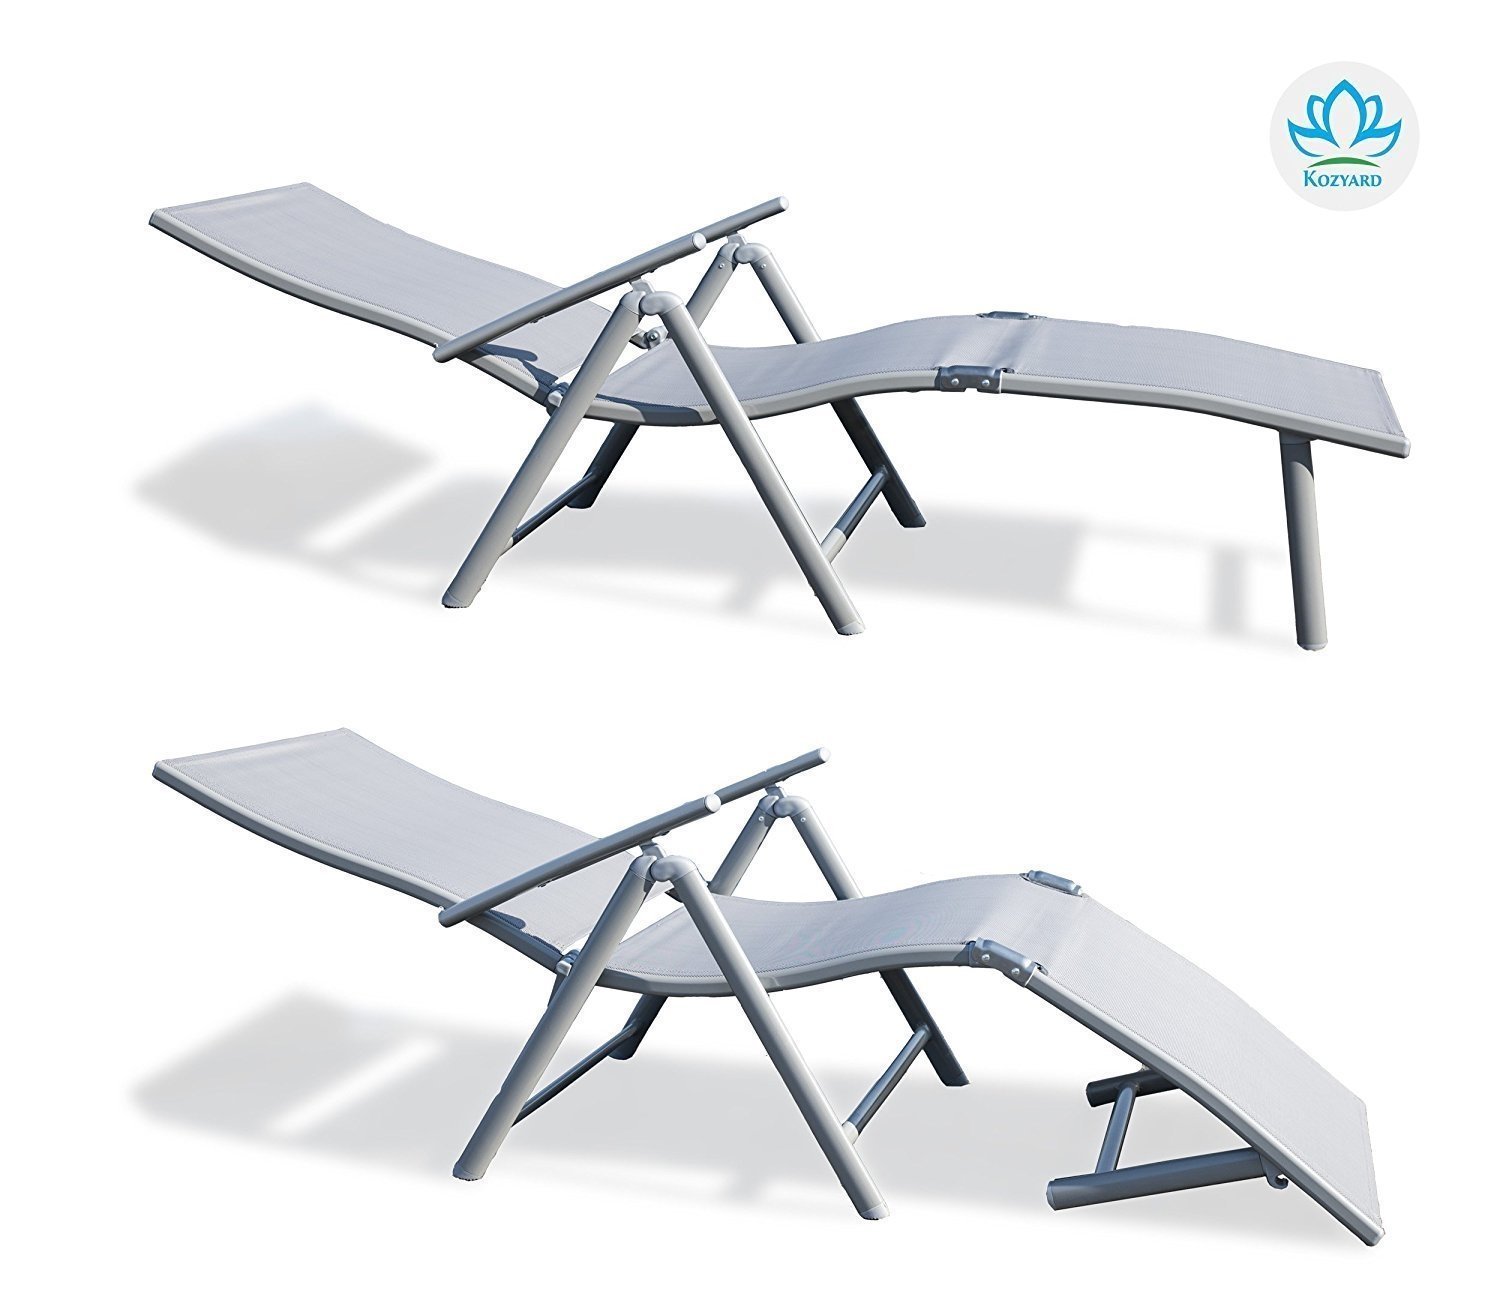 Kozyard Aluminum Beach Yard Pool Adjustable Chaise Lounge Chair ( Gray, 2 Packs) - image 2 of 7